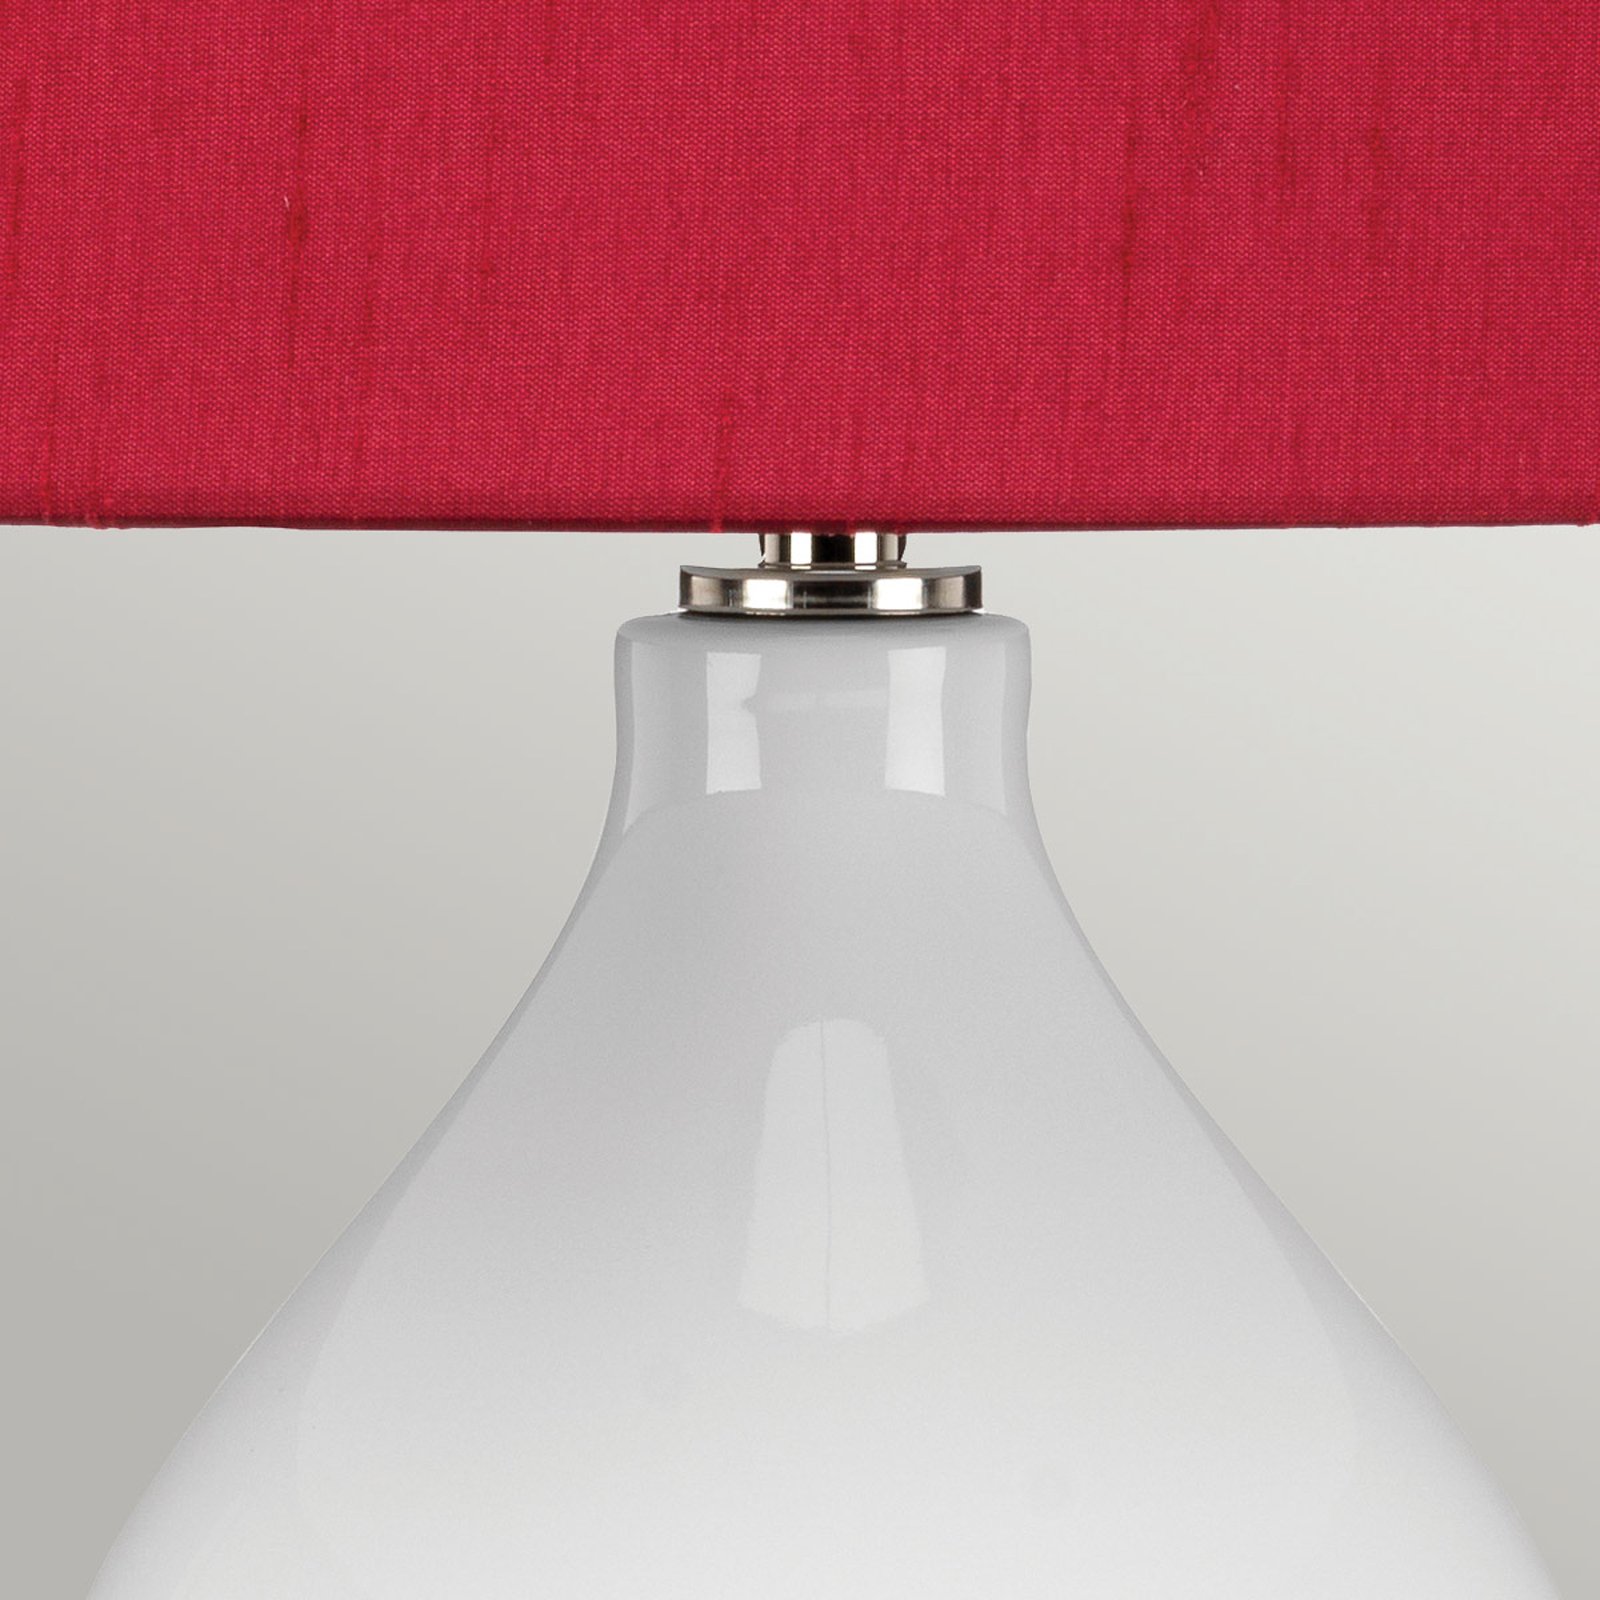 Isla fabric table lamp polished nickel/red